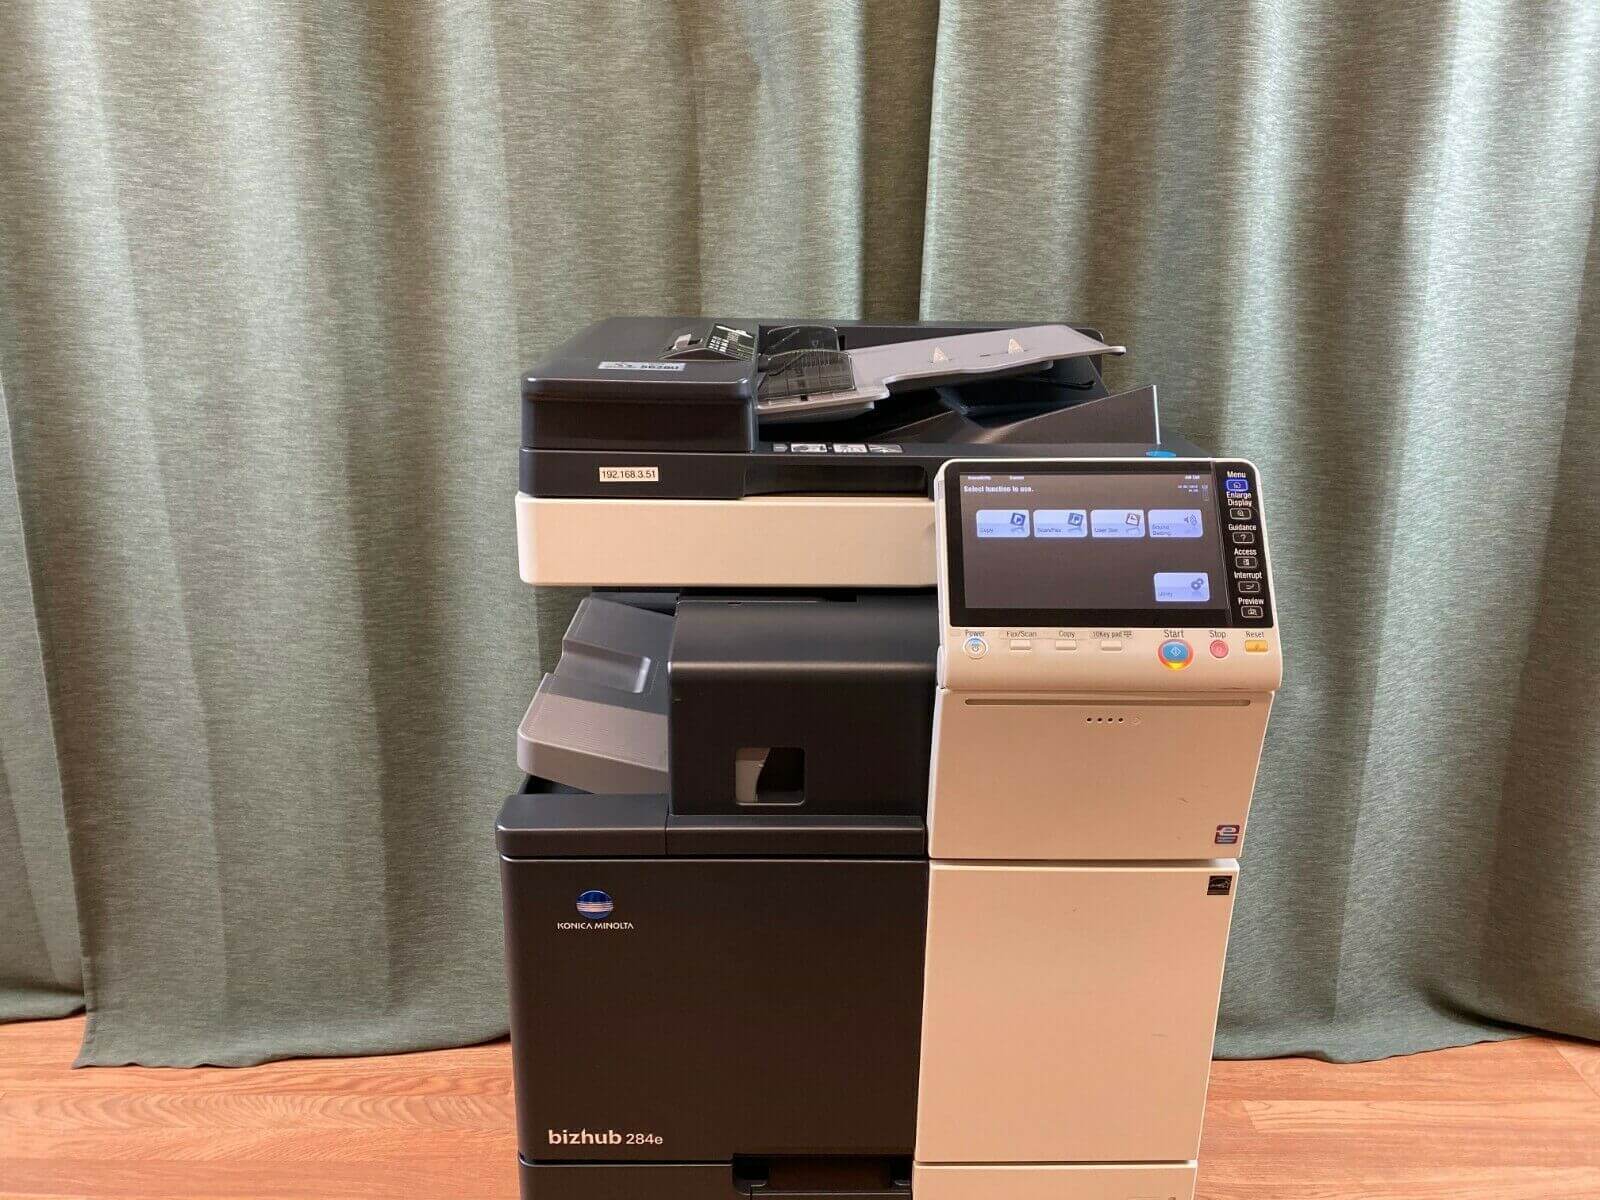 Konica Minolta Bizhub 284e B/W Copier Printer Scanner Fax Finisher LOW USE 44k - copier-clearance-center